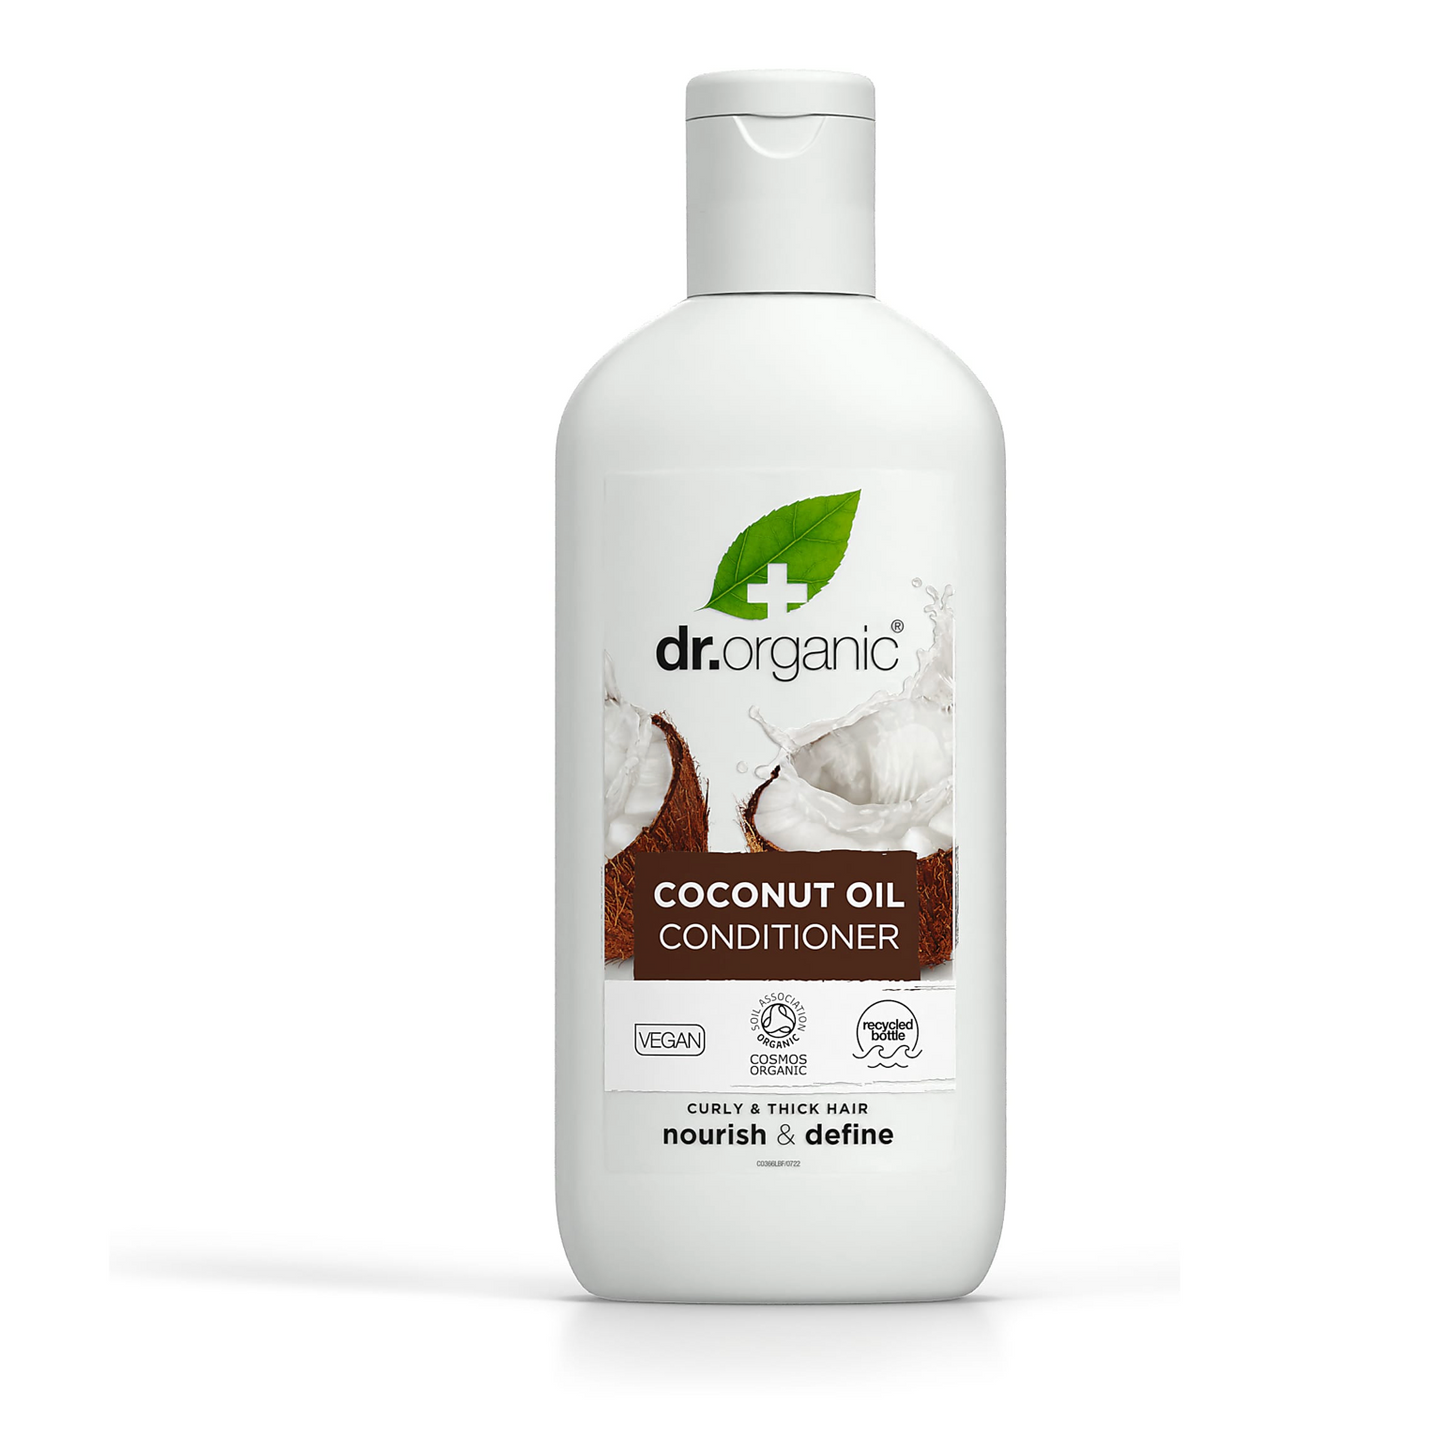 Dr Organic Conditioner 265ml, Virgin Coconut Oil {Nourish & Define}